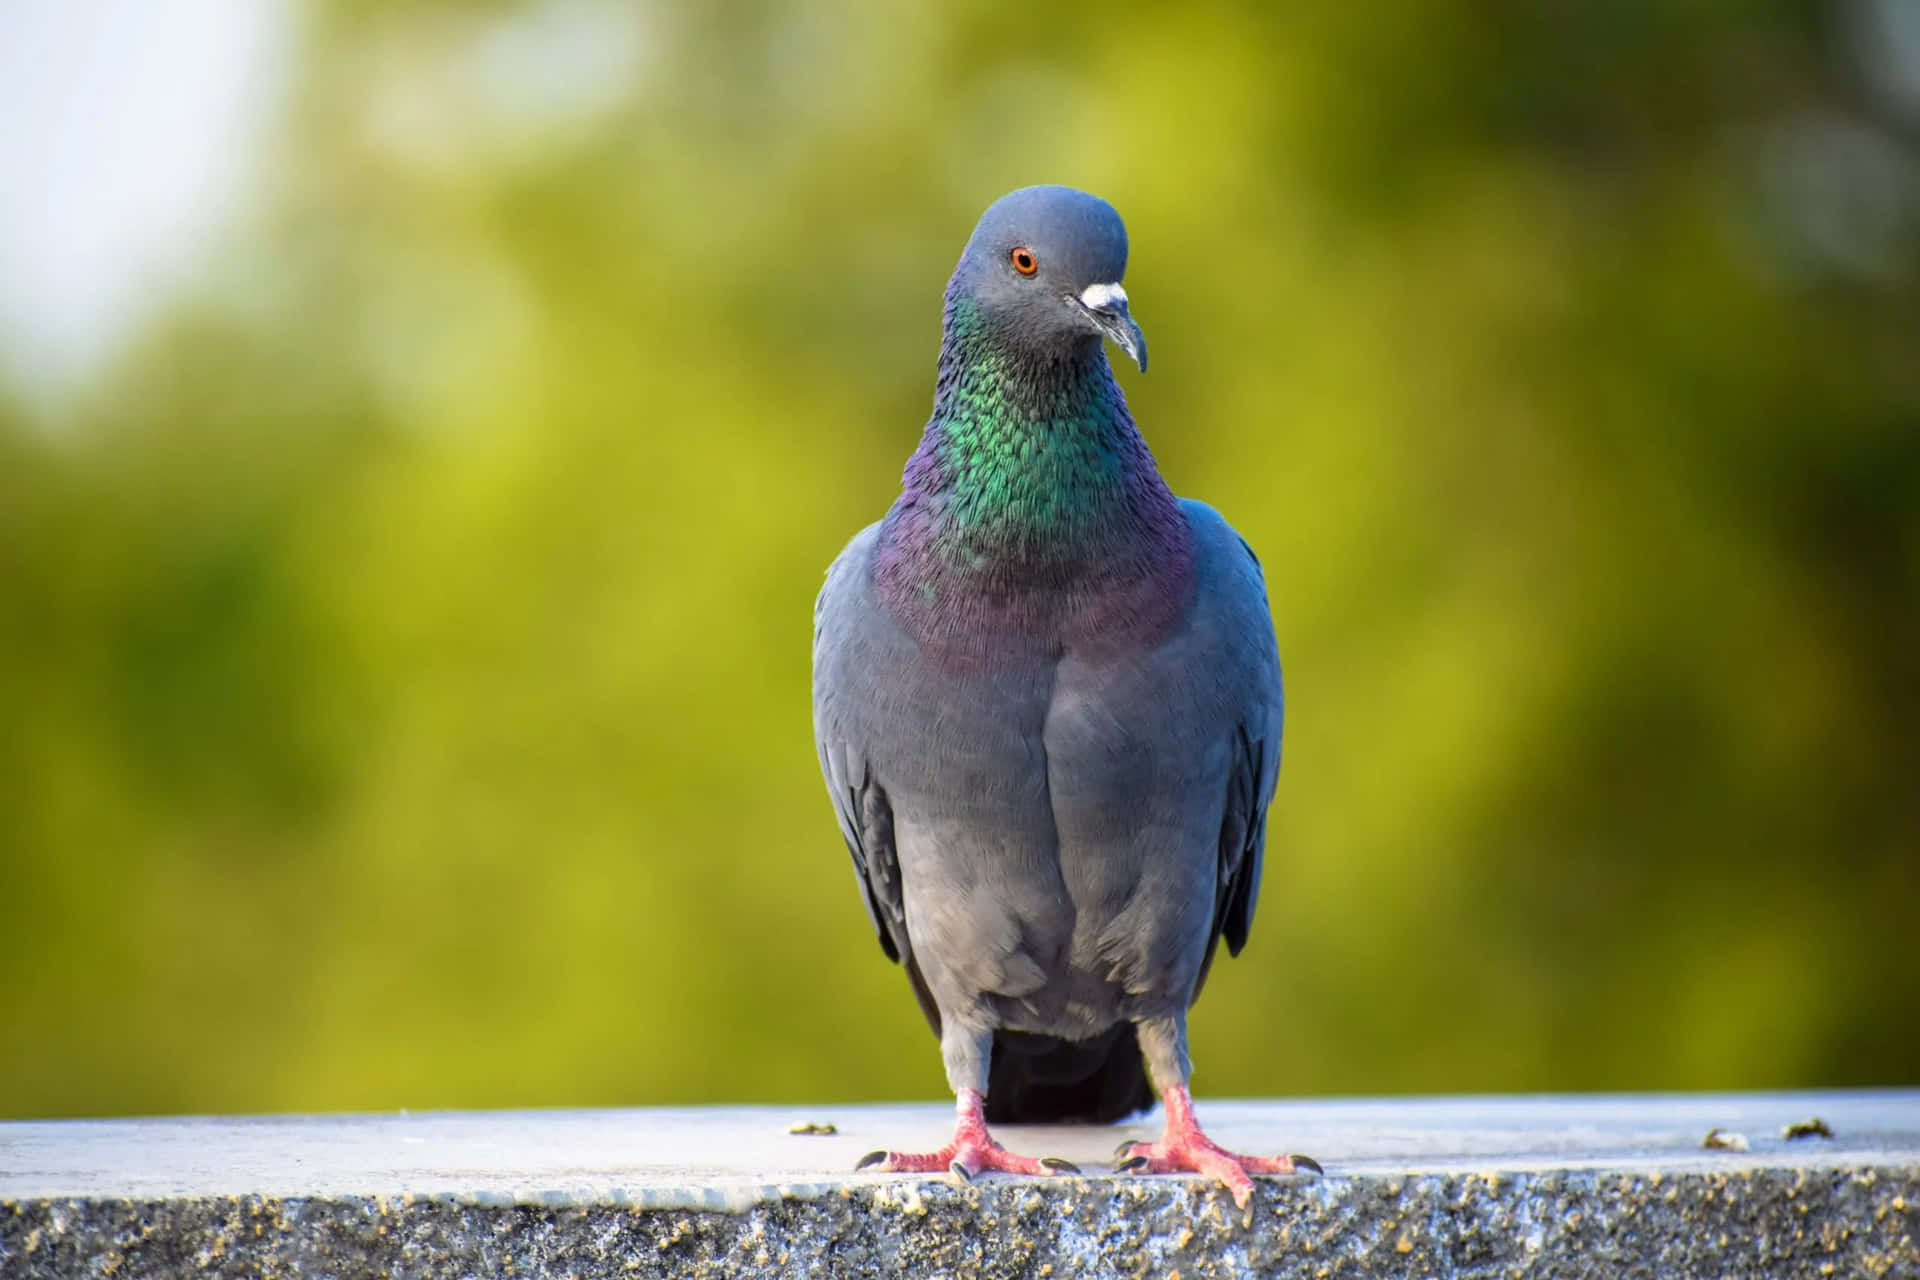 A Friendly Pigeon